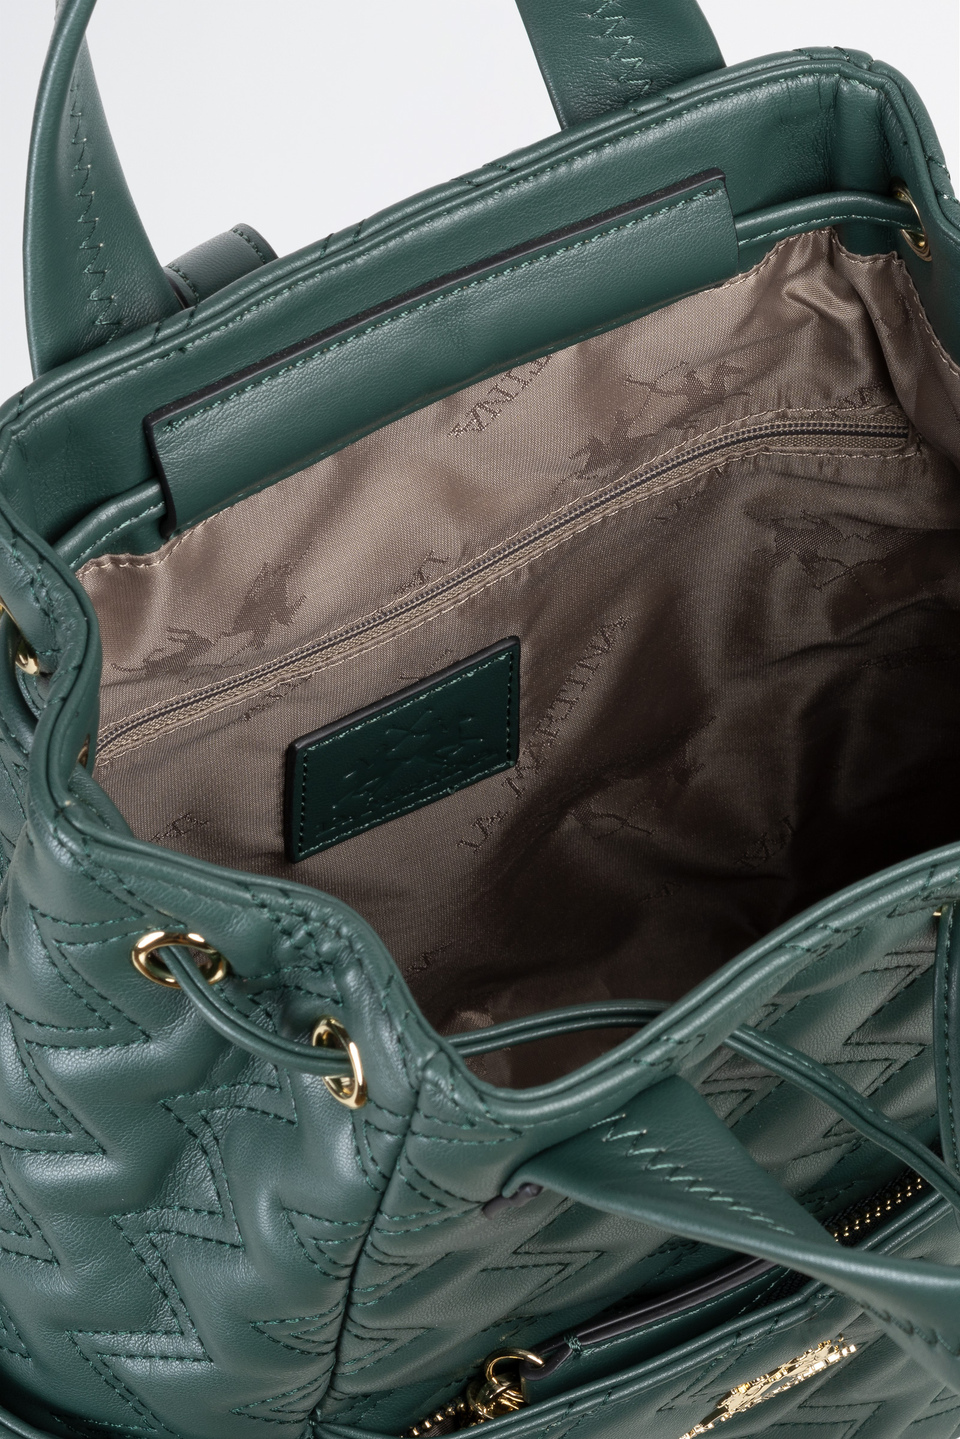 Backpack in matelassé fabric | La Martina - Official Online Shop